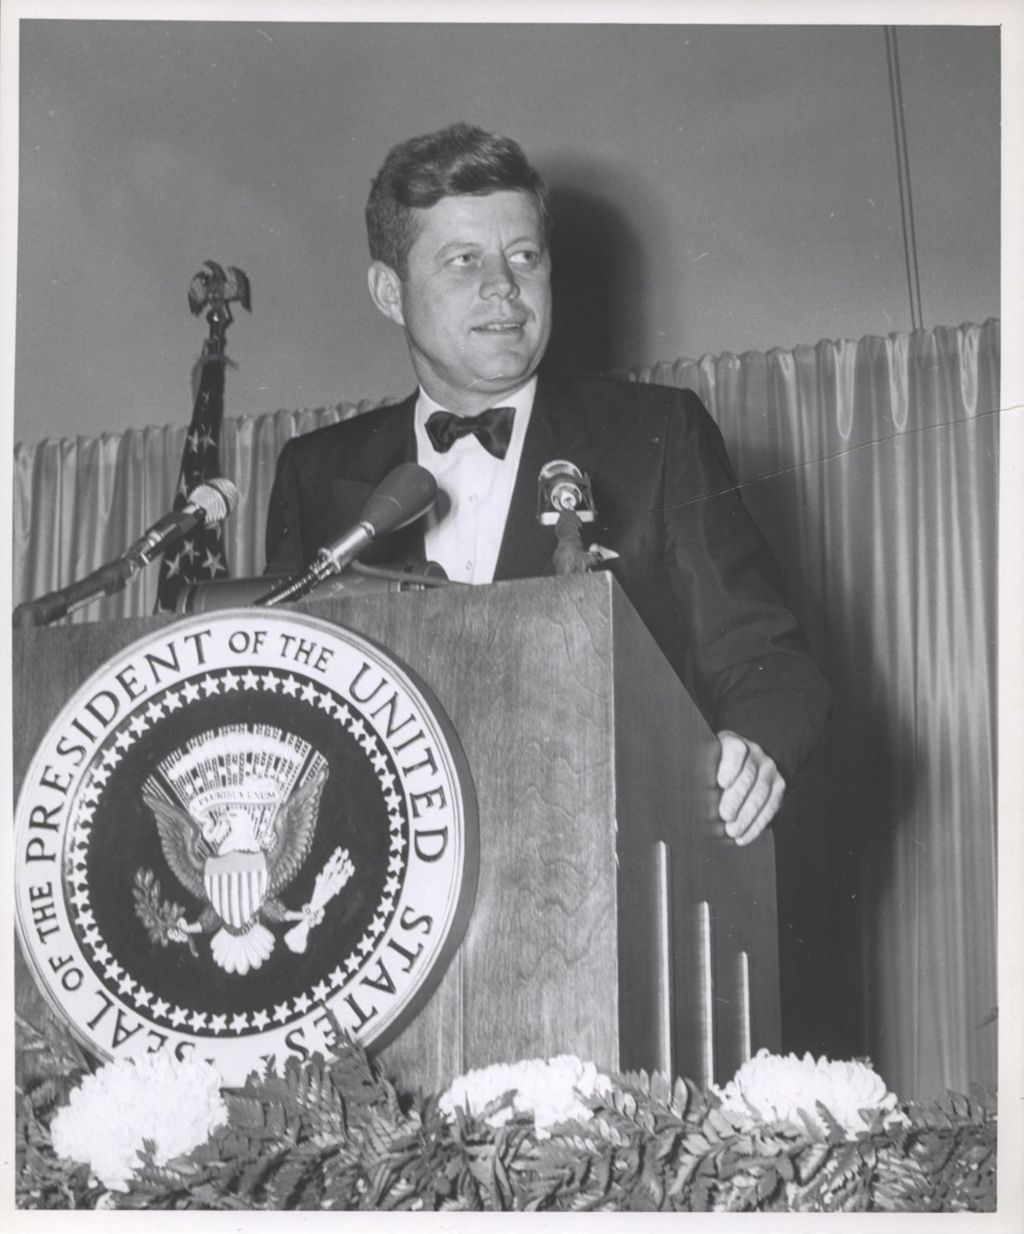 Miniature of John F. Kennedy at the speaker's podium at Democratic fundraising dinner